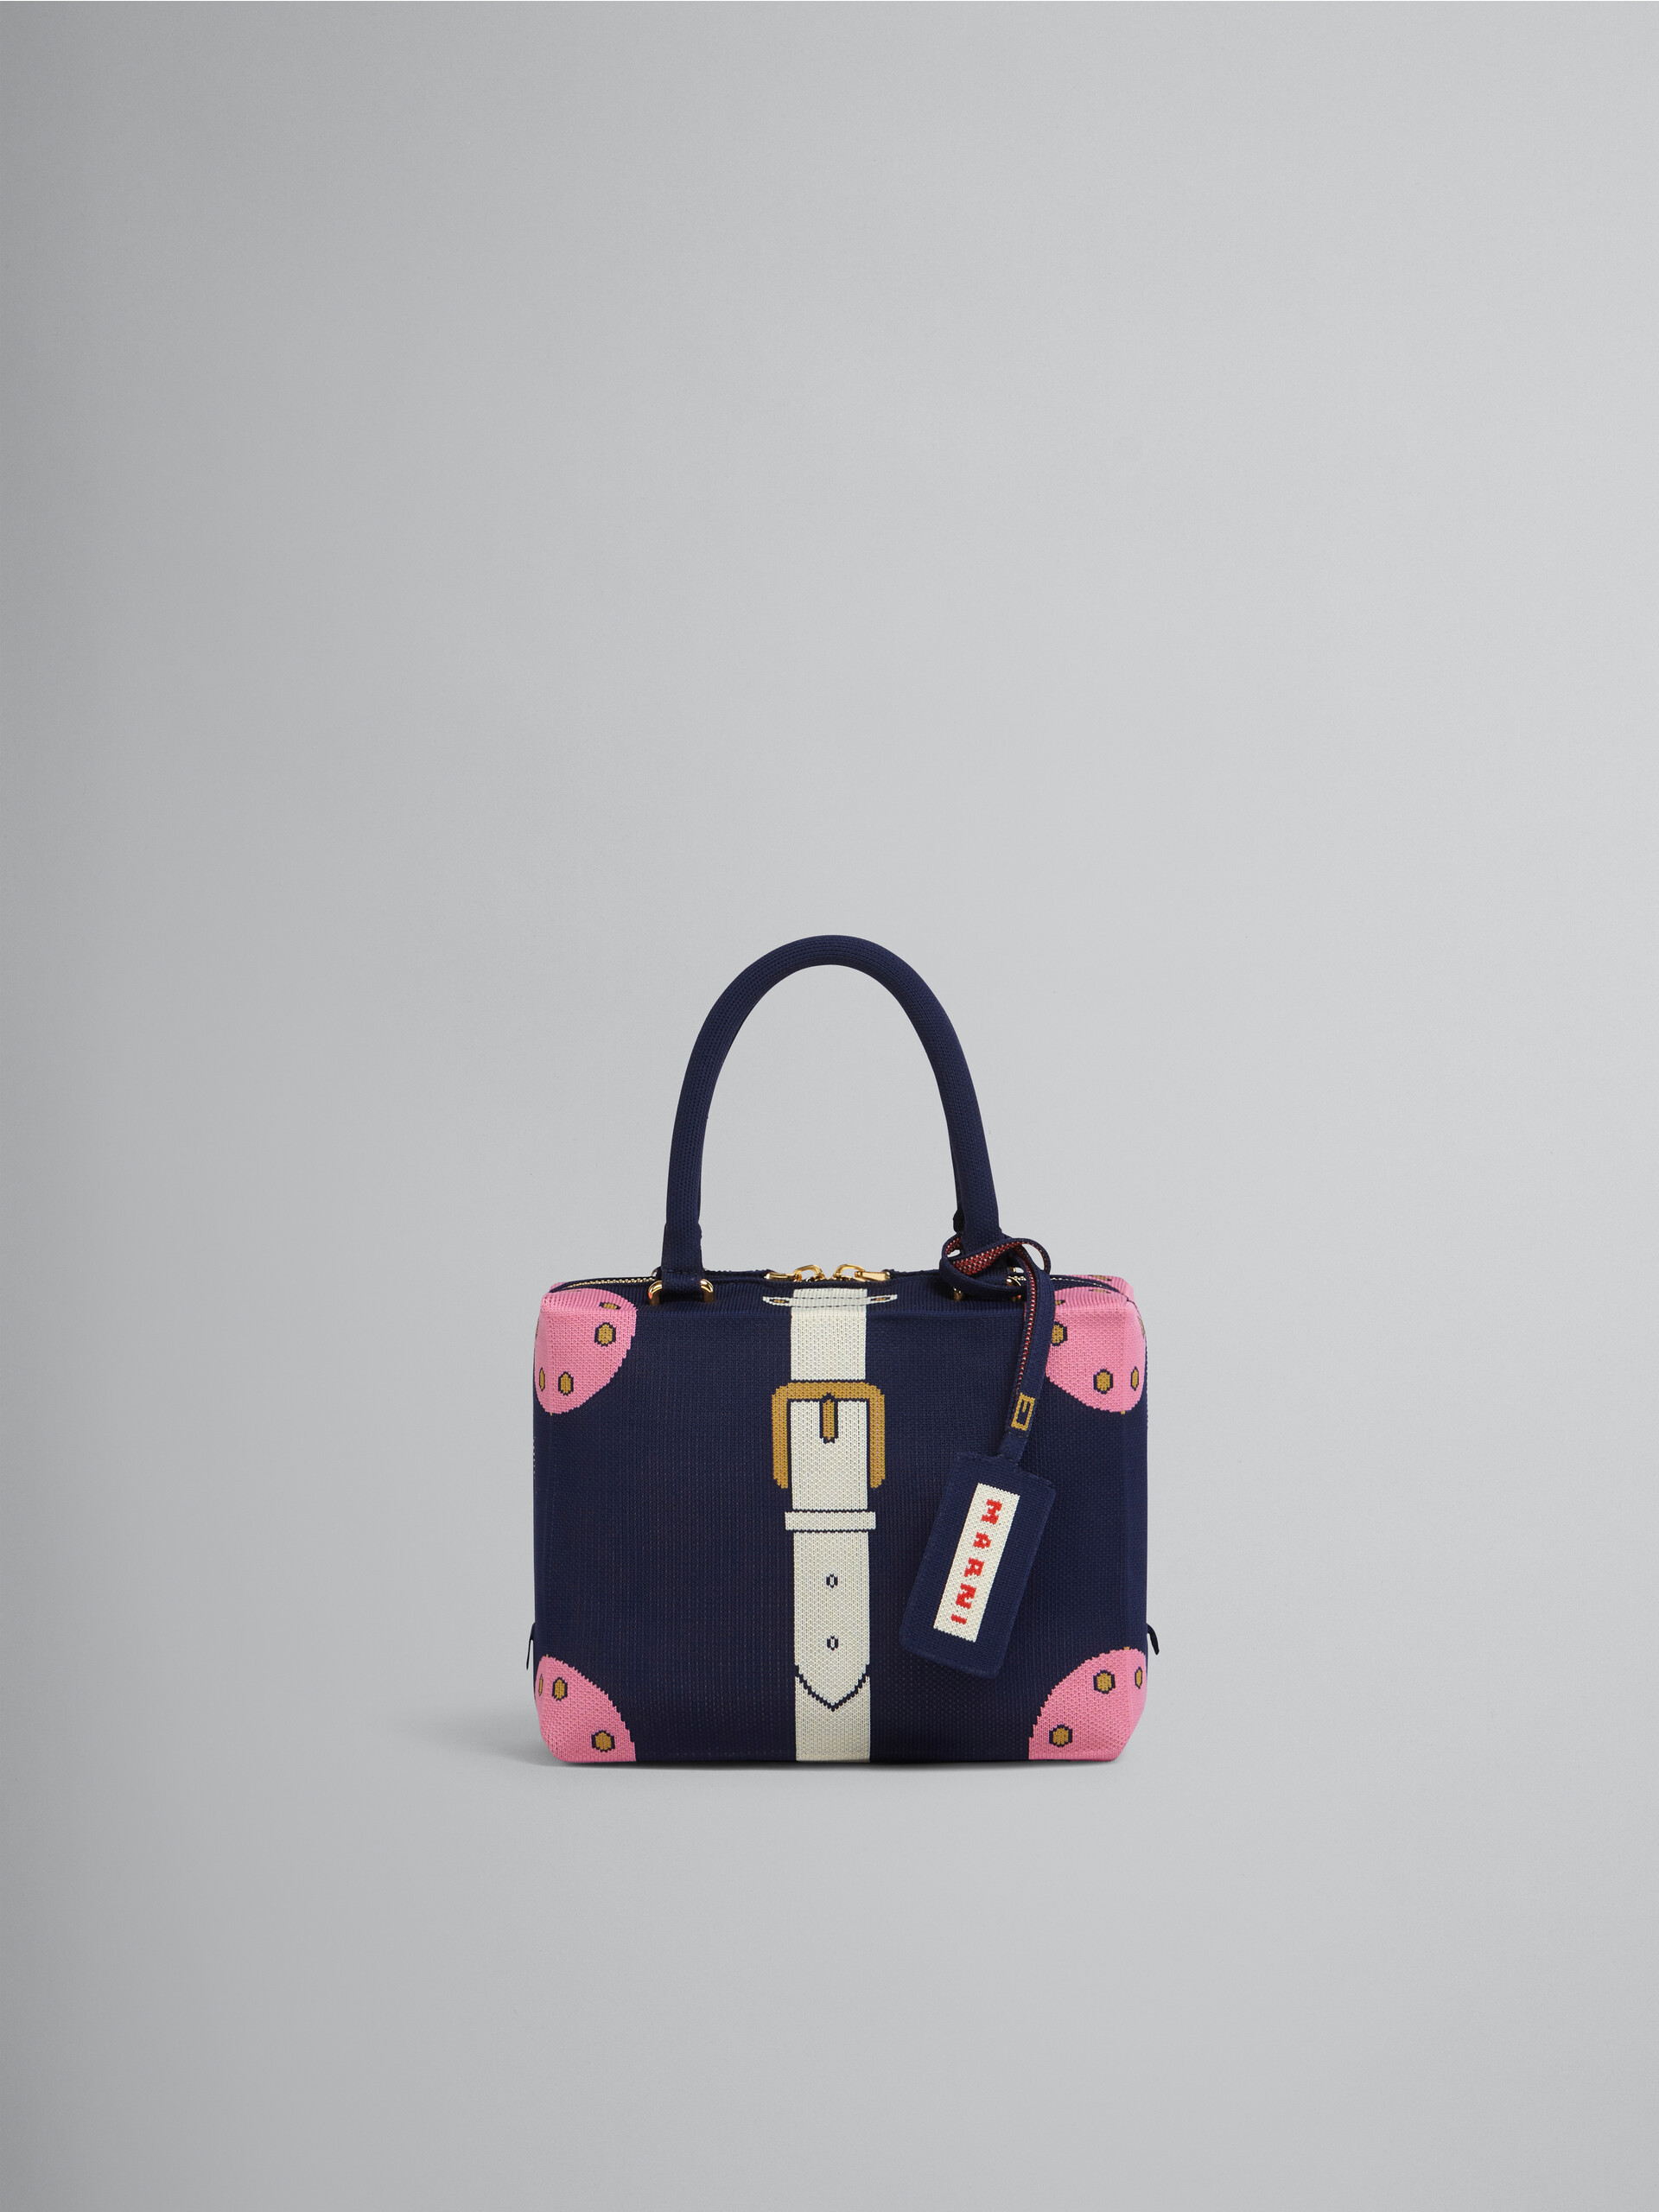 CUBIC bag in blue trompe-l'œil jacquard - Handbag - Image 1